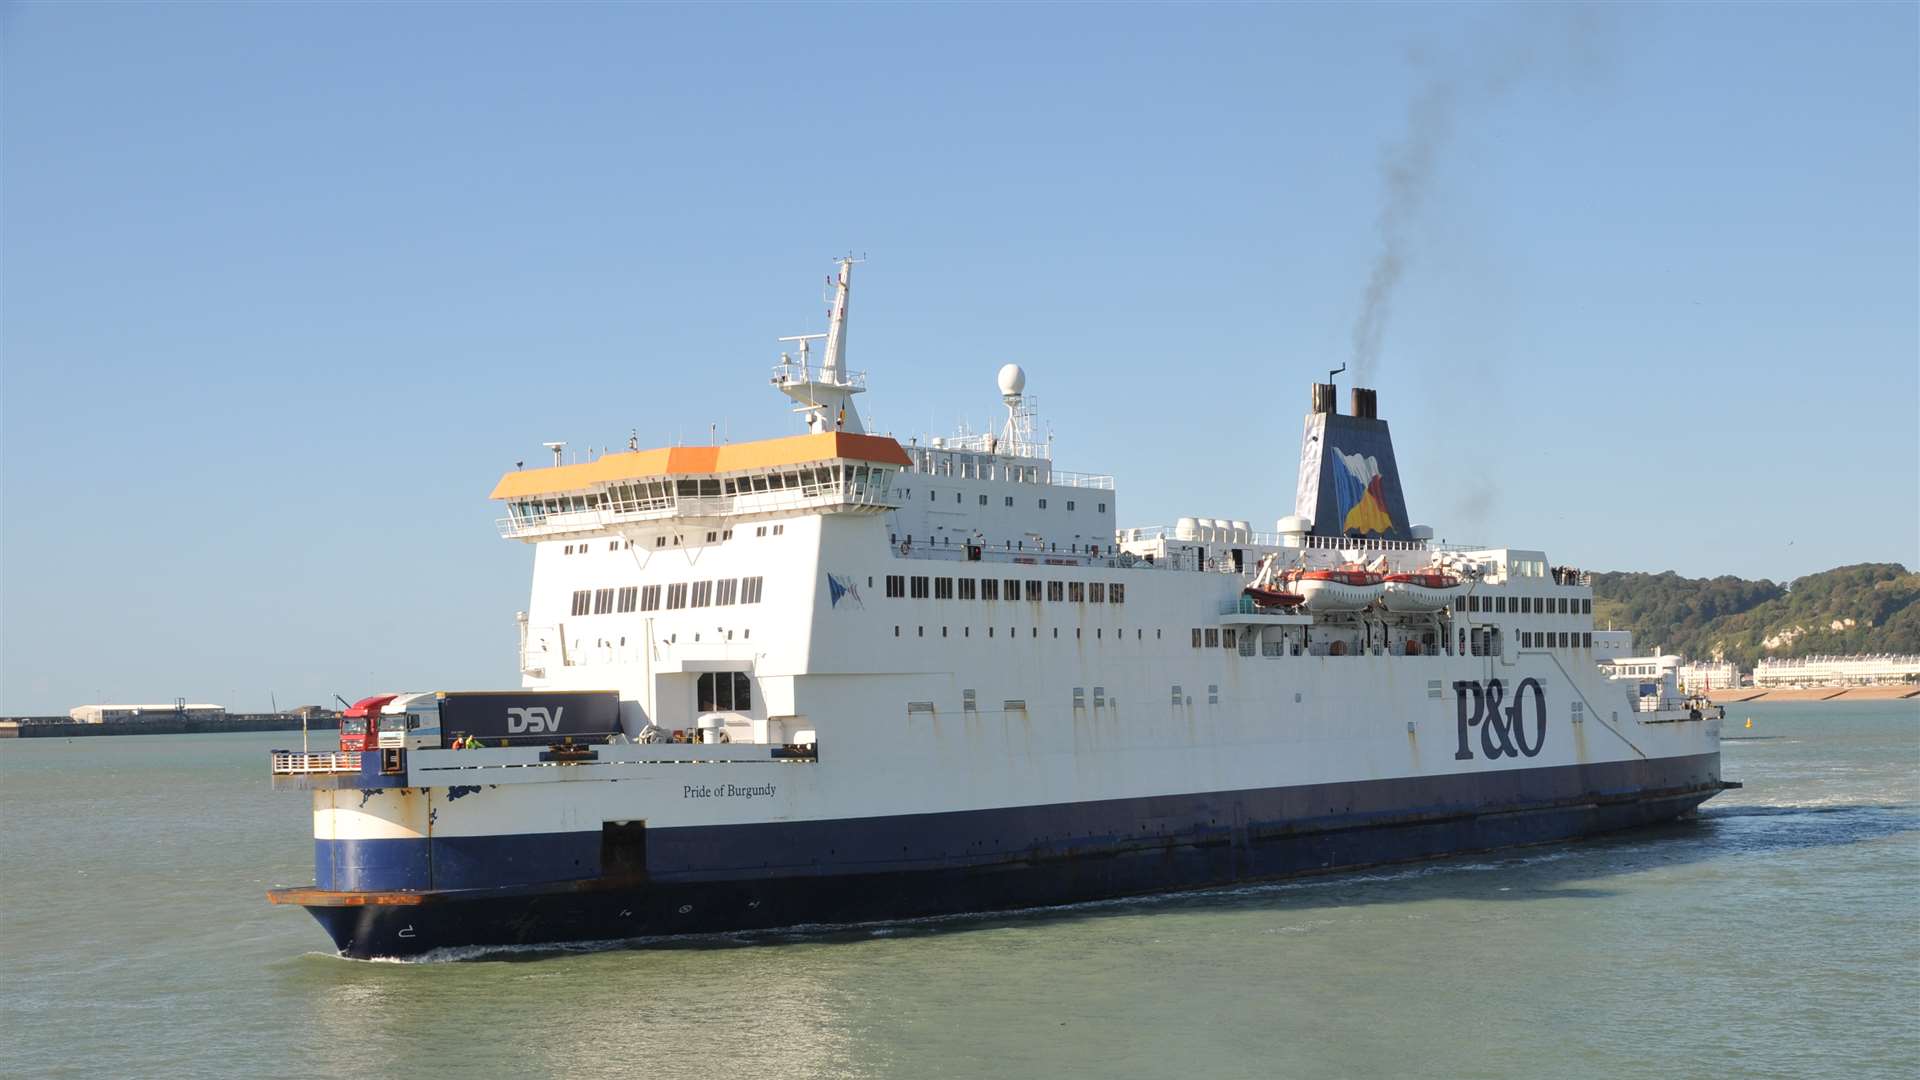 P&O ferry the Pride of Burgundy